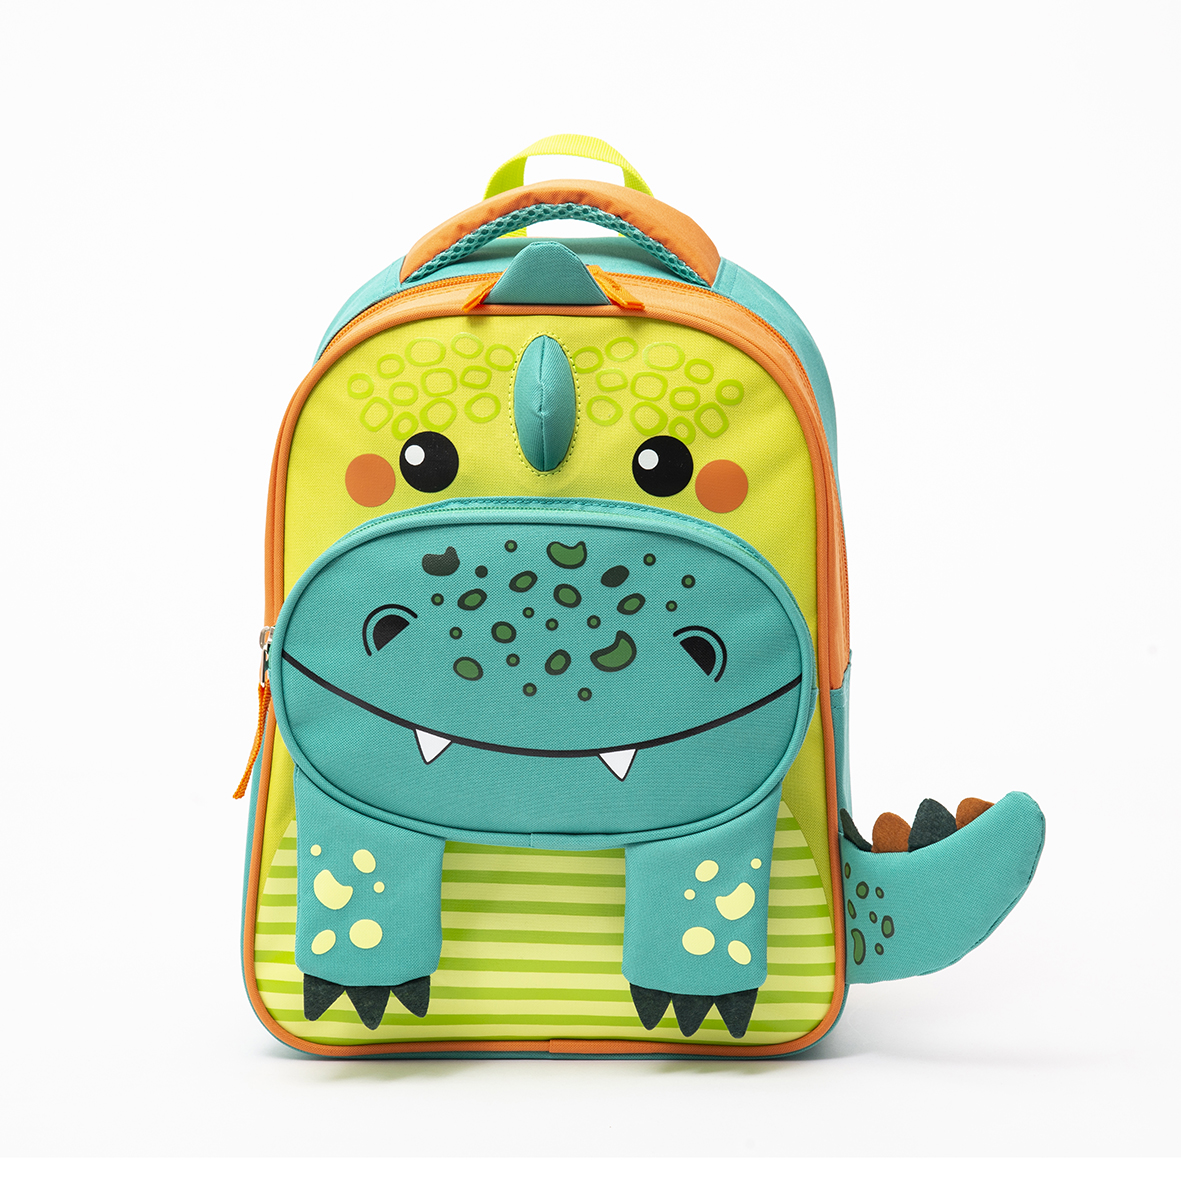 New design cute stereoscopic green crocodile kids bag Featured Image